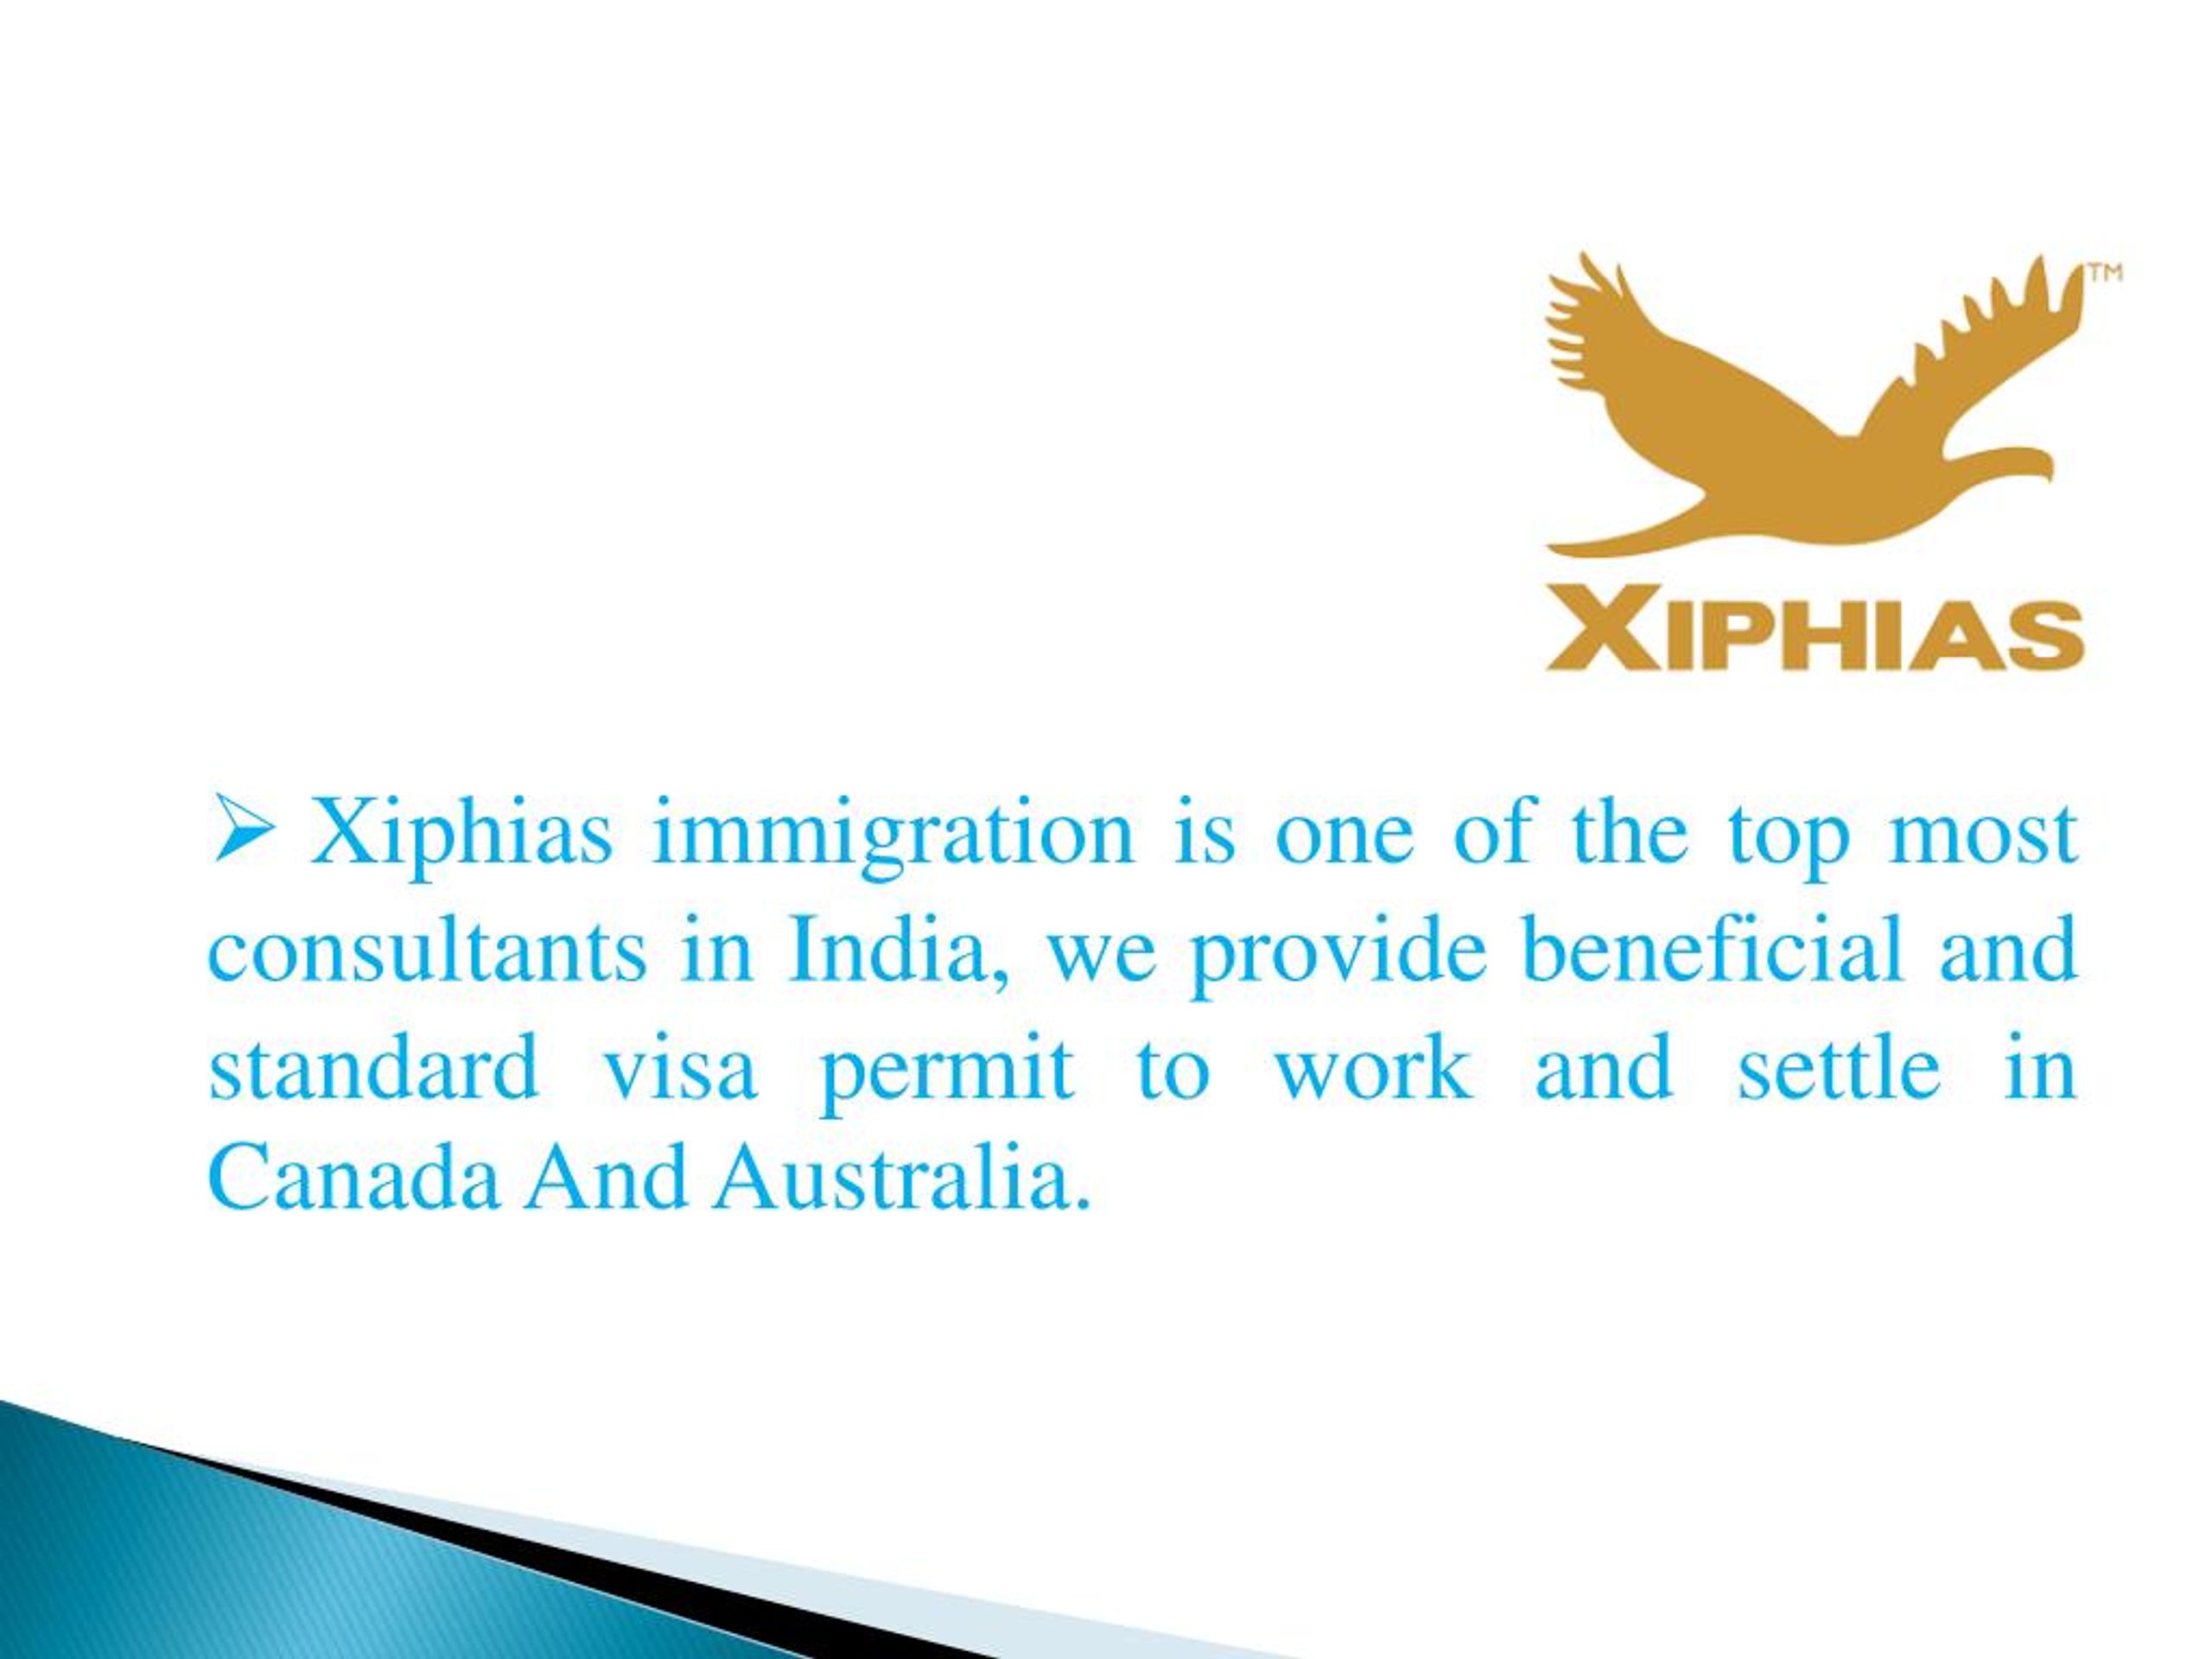 us visa renwal for canada permanent resident